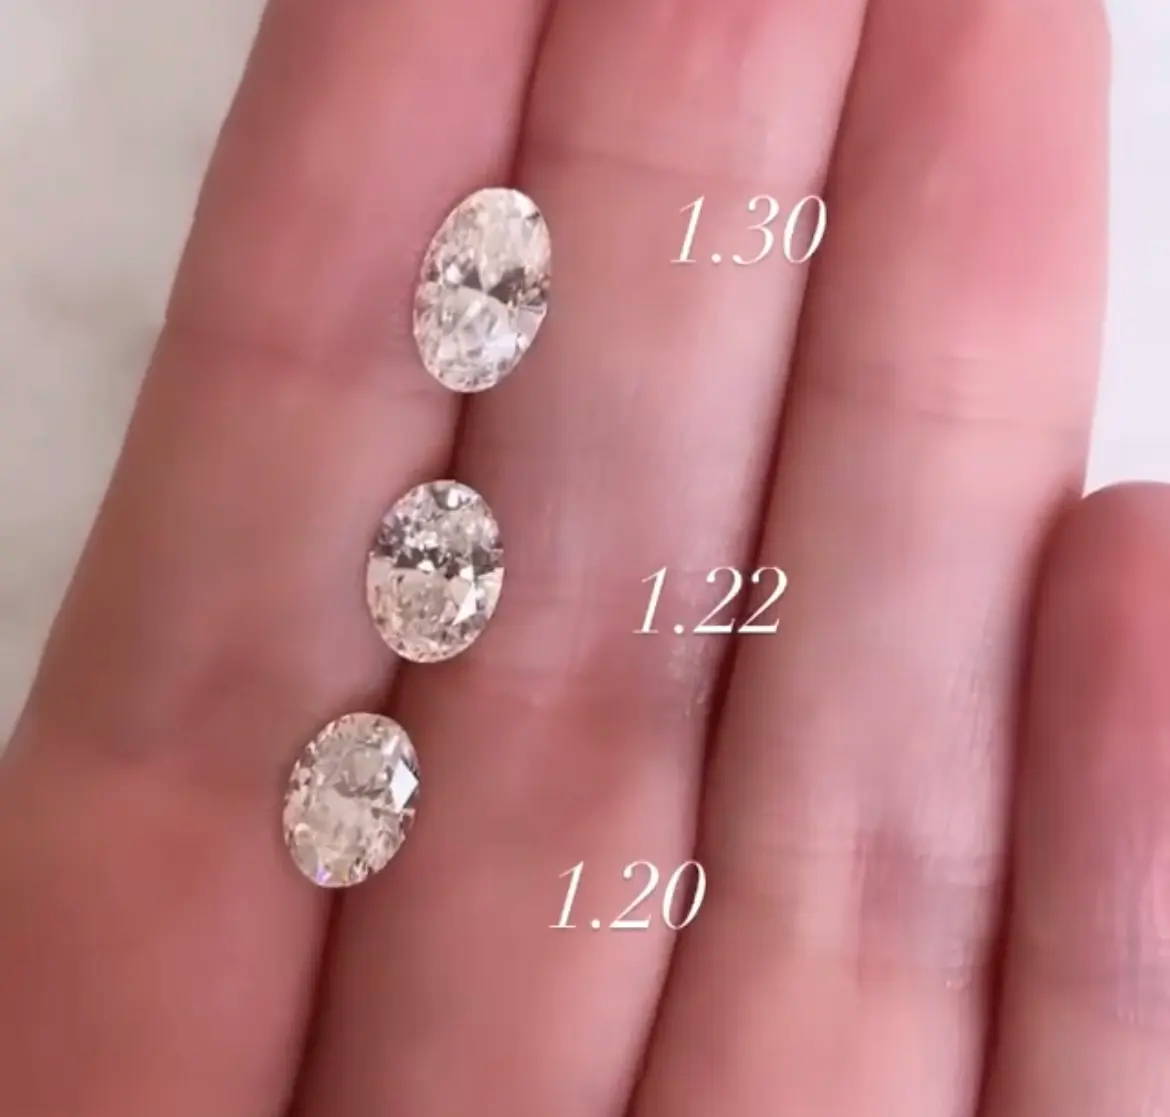 oval cut diamond carat sizes on a hand